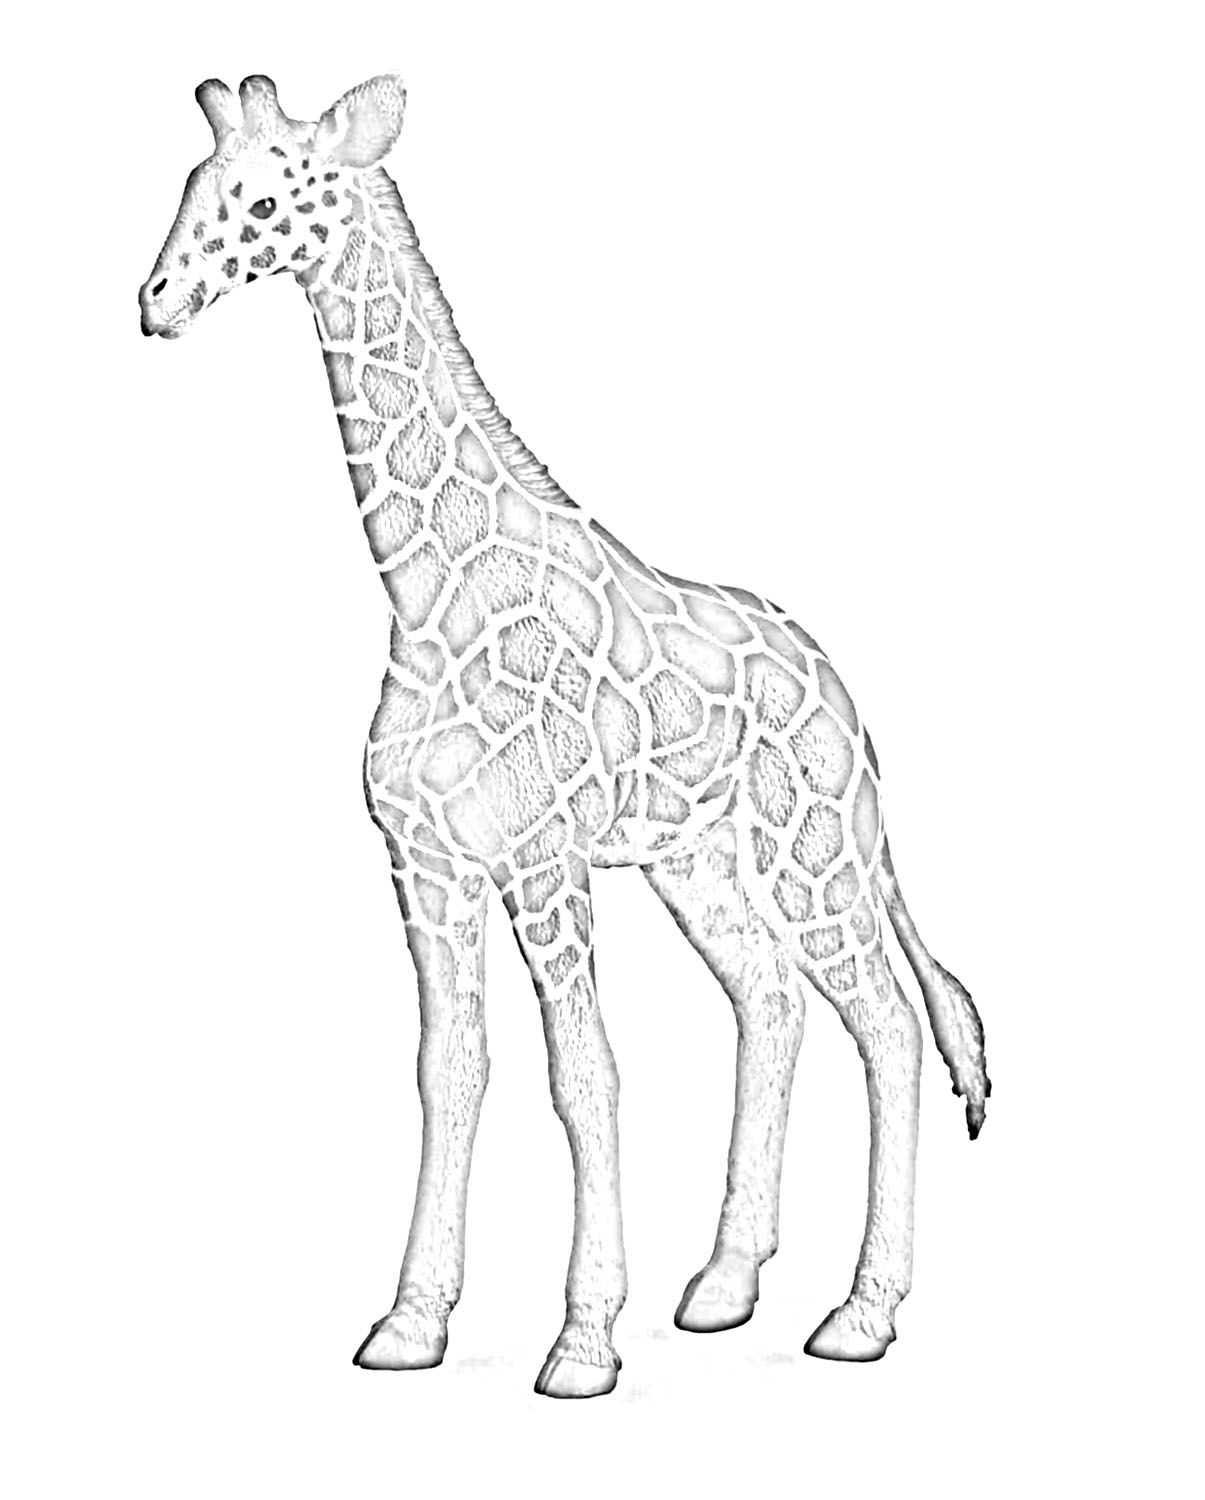 Жираф картинка дикого животного